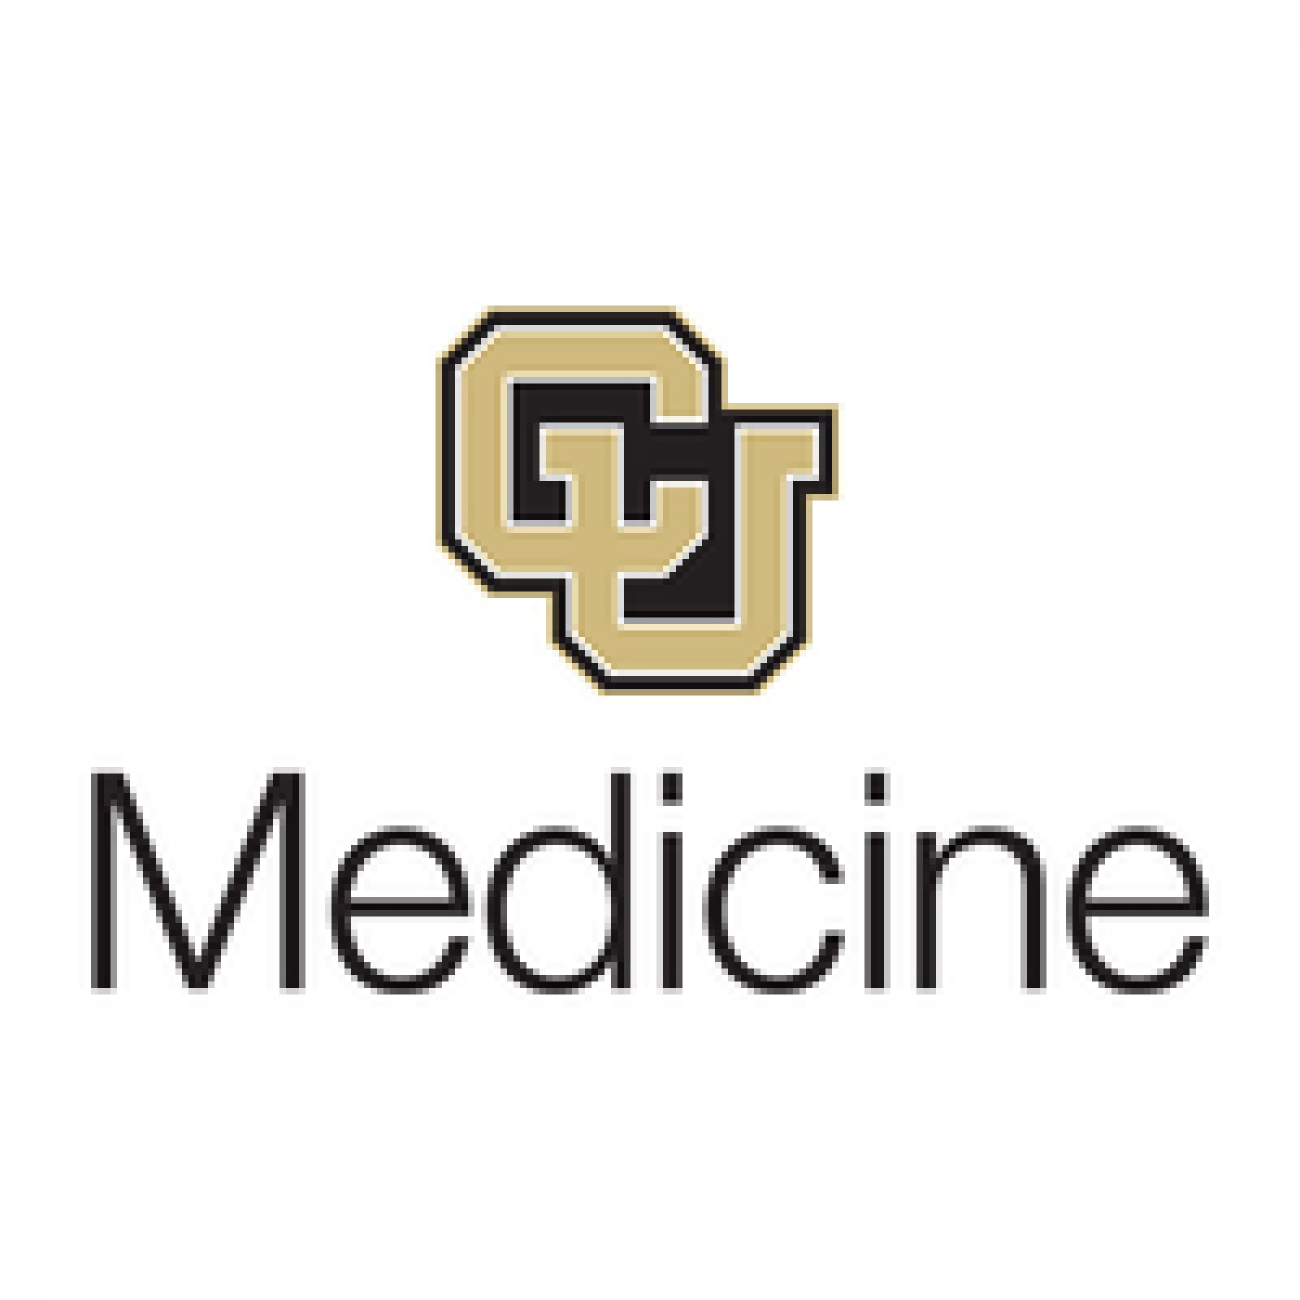 Department of Neurology, University of Colorado School of Medicine